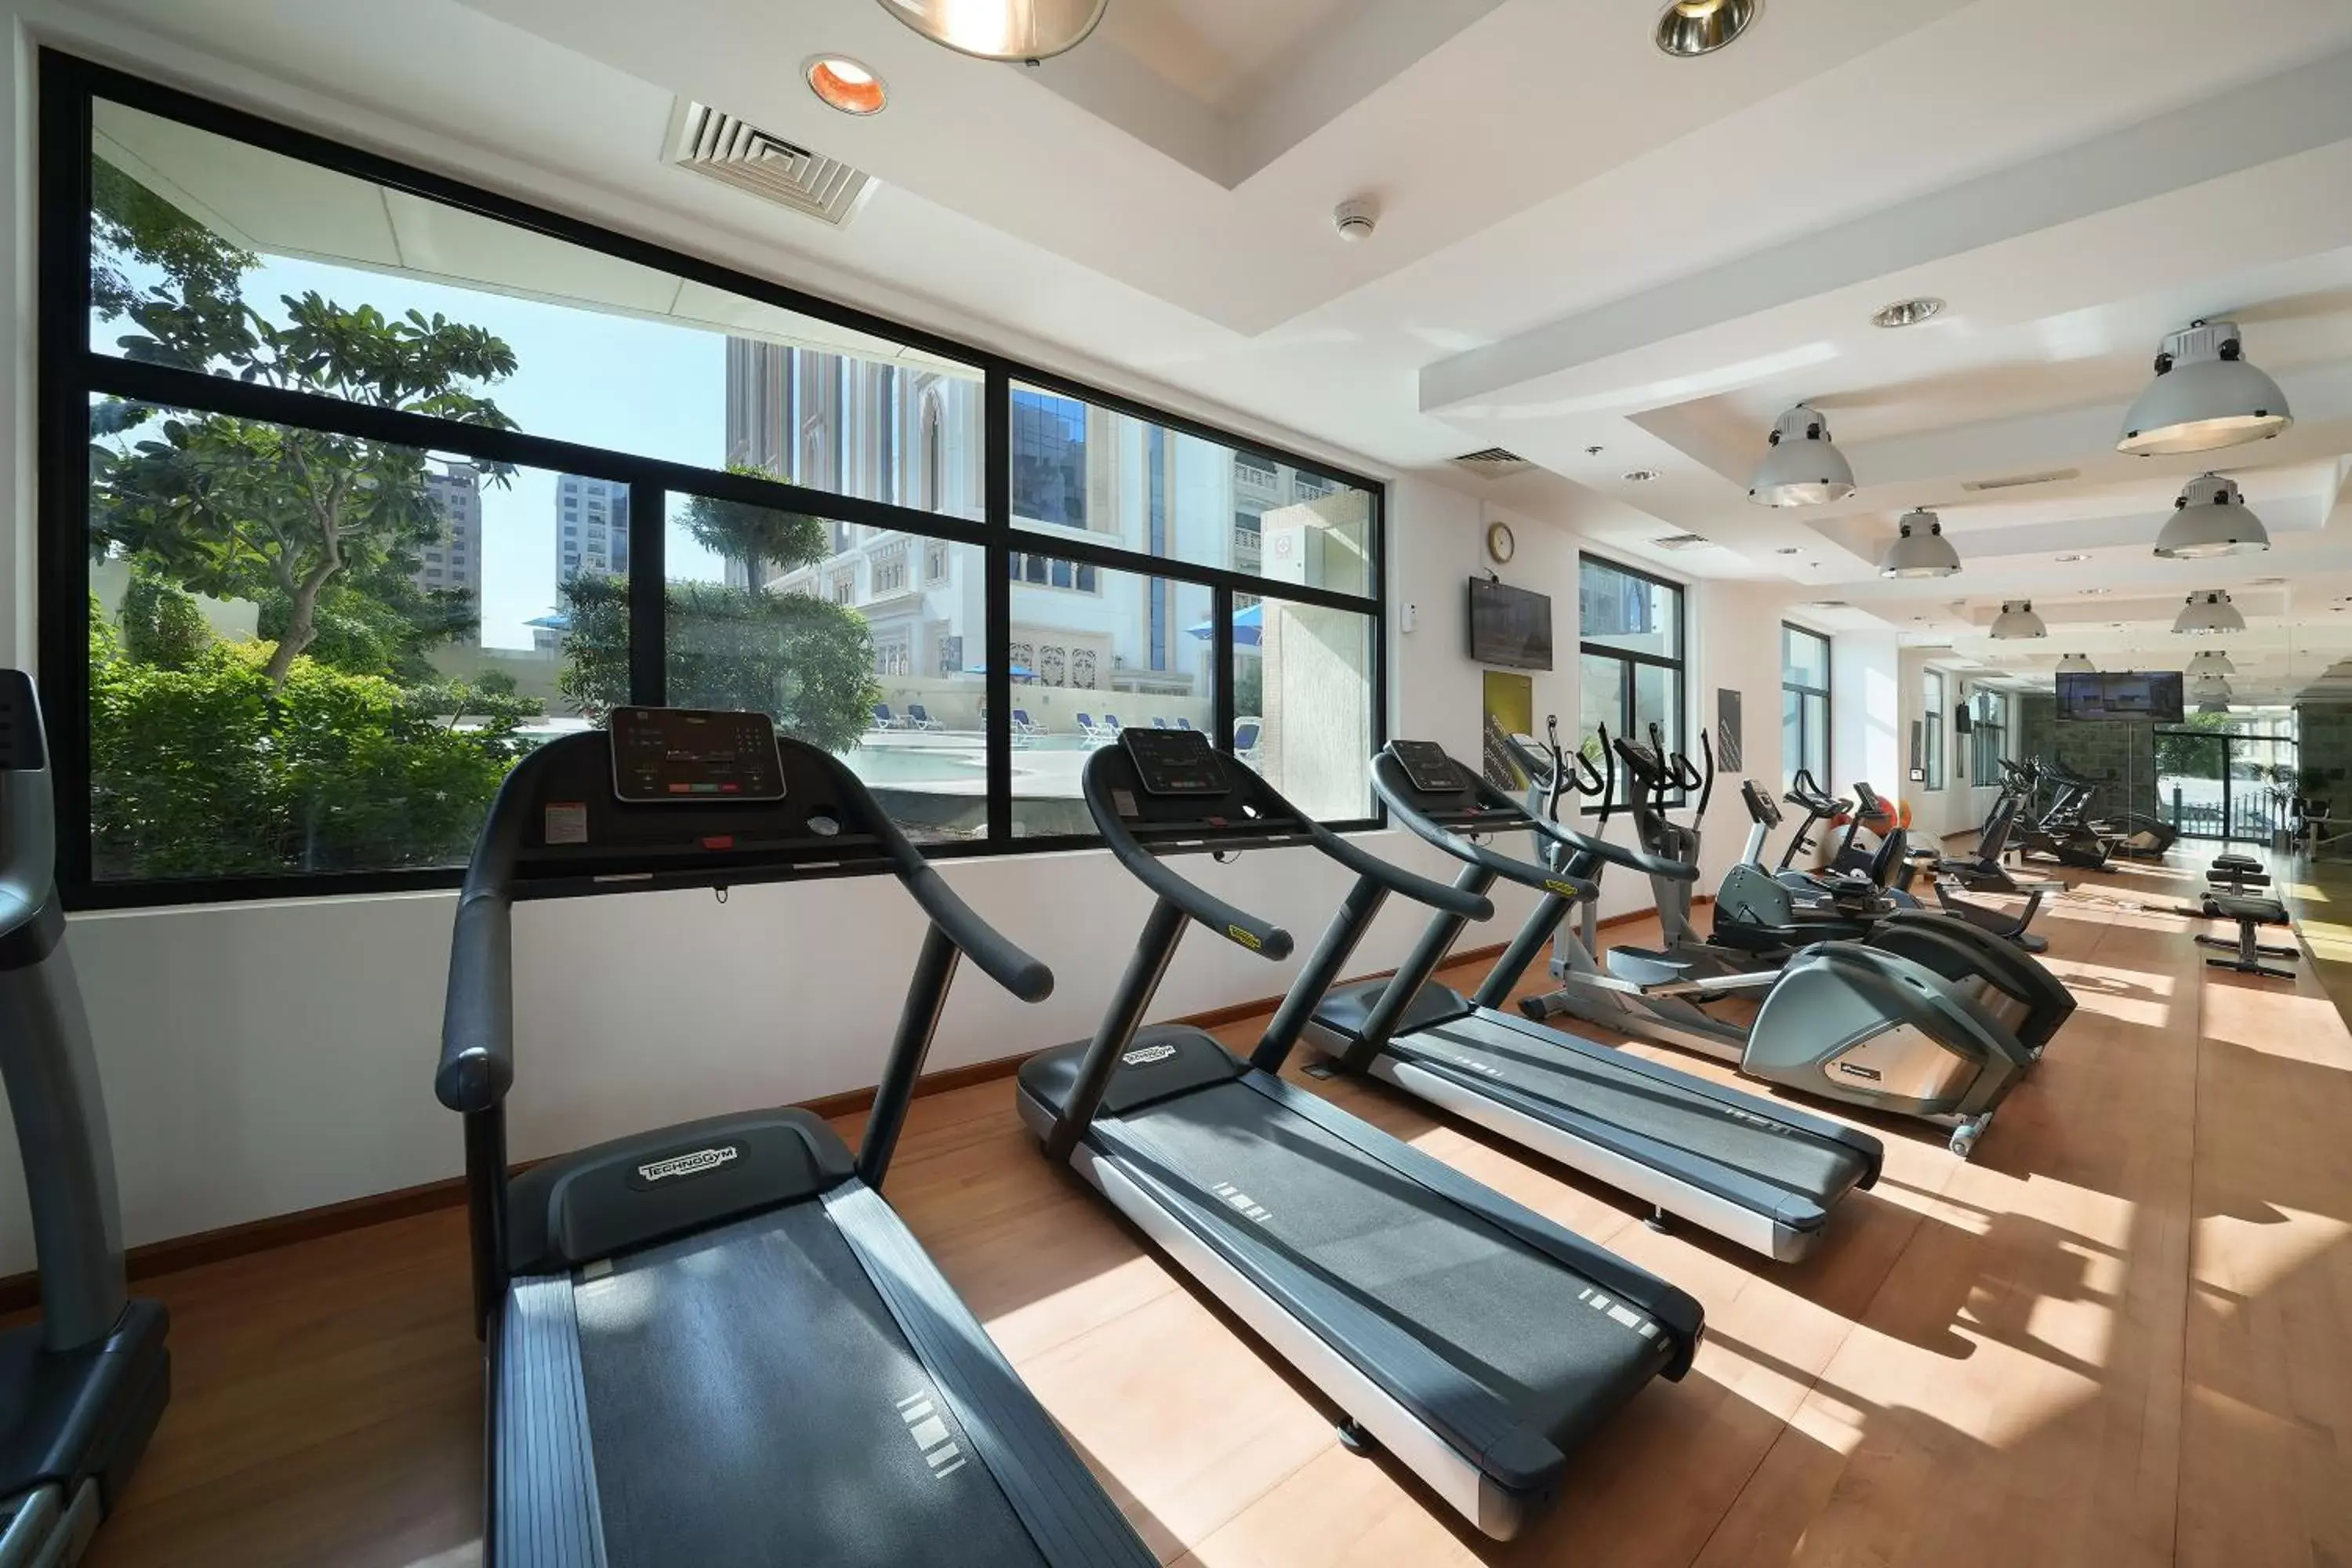 Fitness centre/facilities, Fitness Center/Facilities in Park Apartments Dubai, an Edge By Rotana Hotel